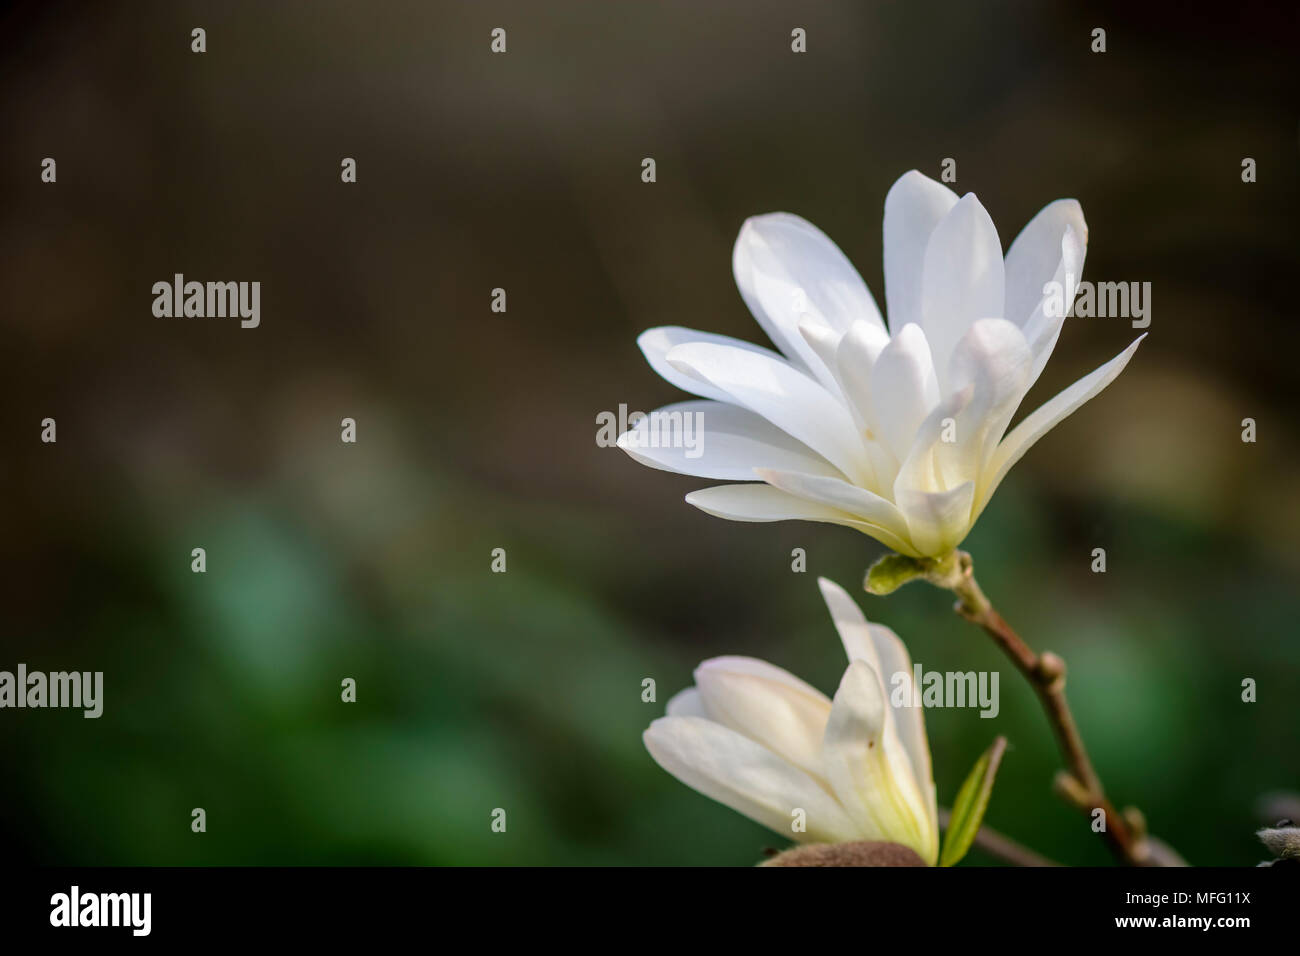 dwarf Magnolia flower against blurry background Stock Photo